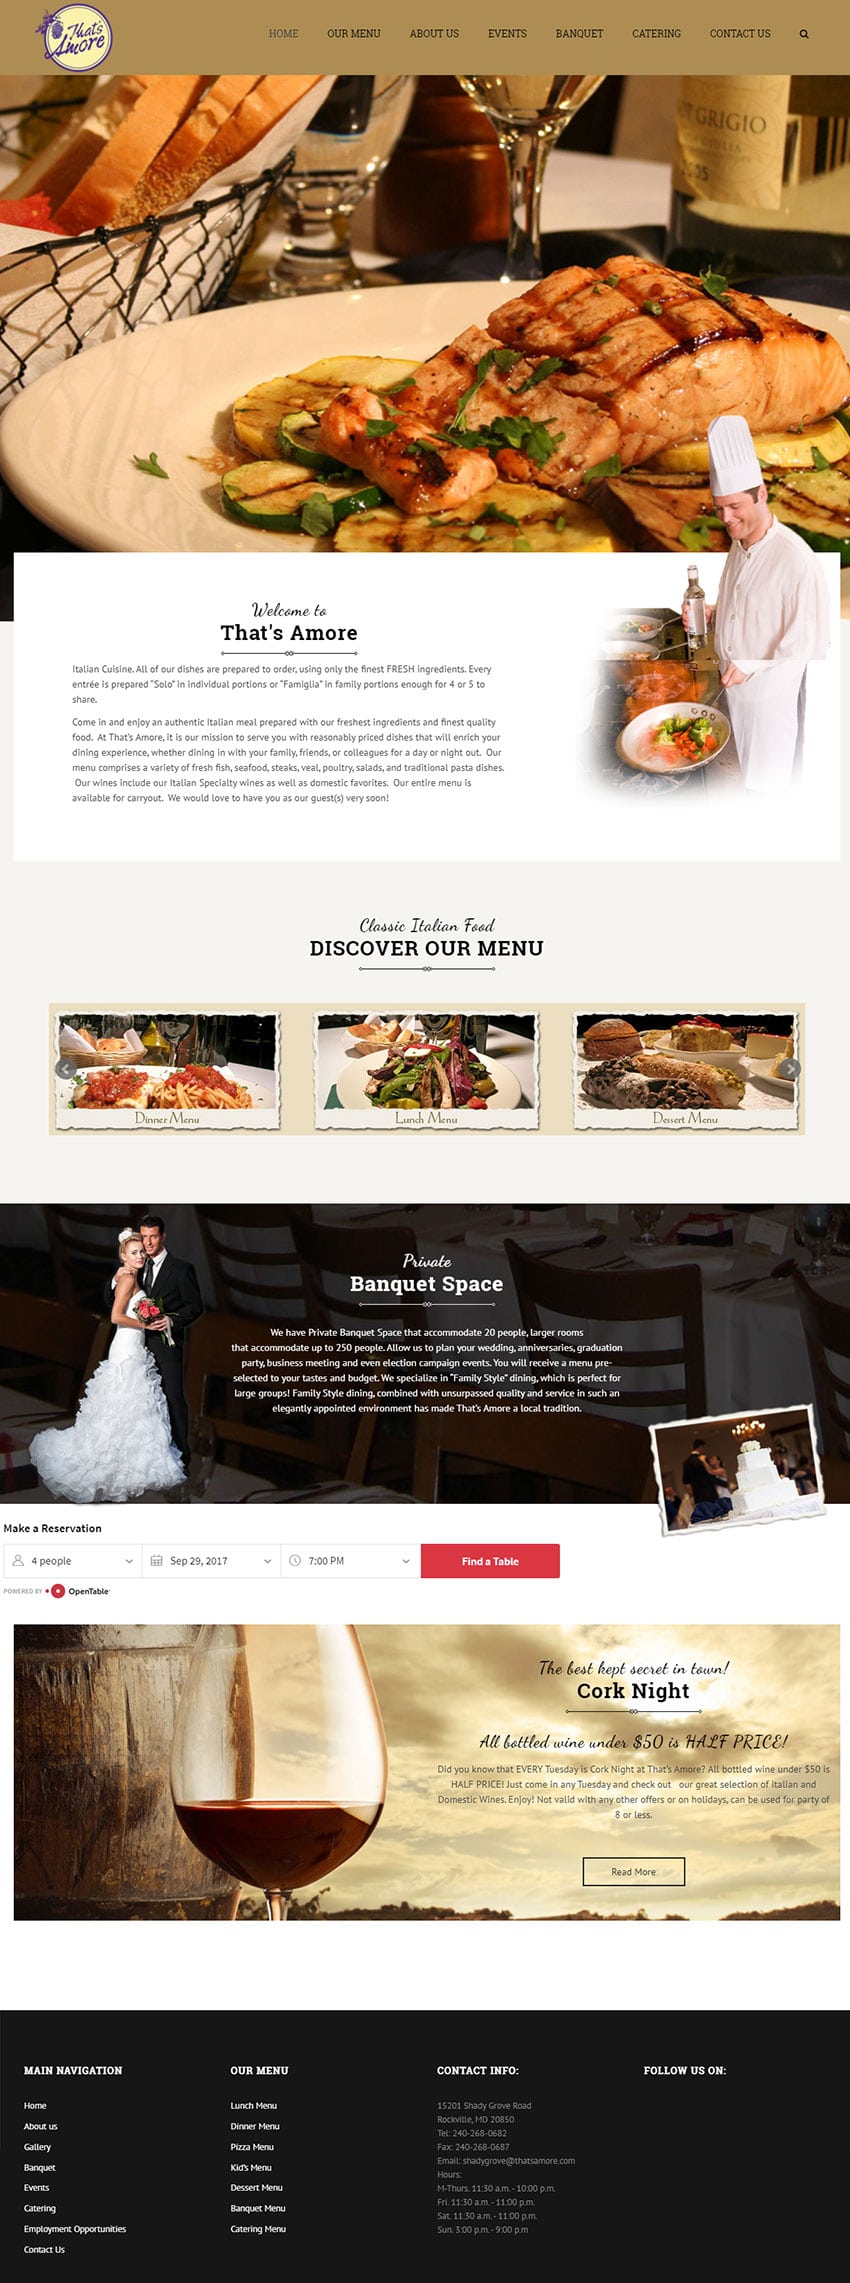 Restaurant Web Design Services